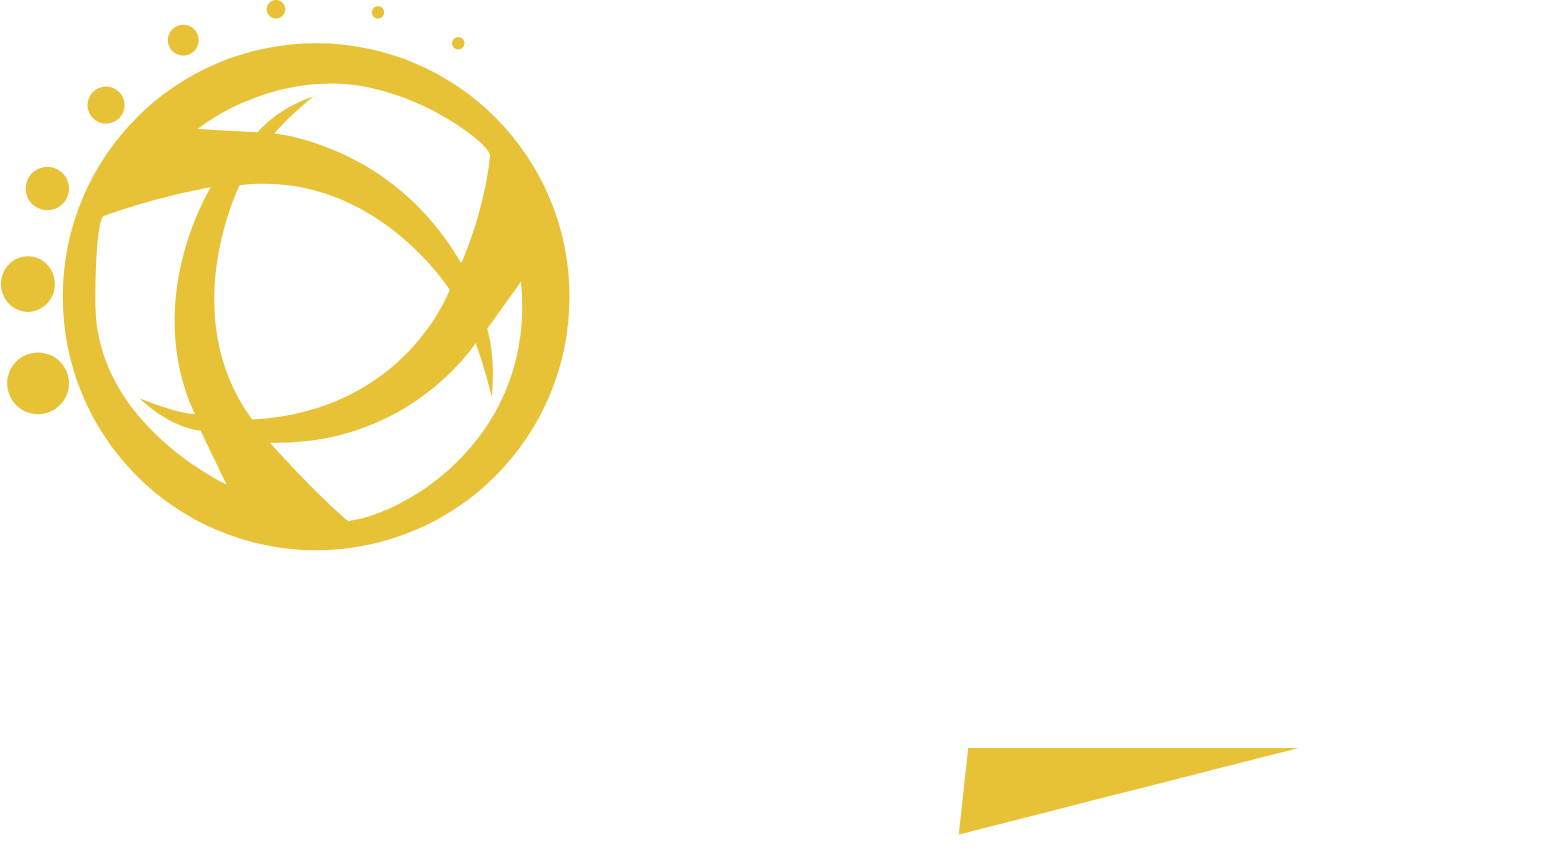 TransGlobe Energy logo large for dark backgrounds (transparent PNG)